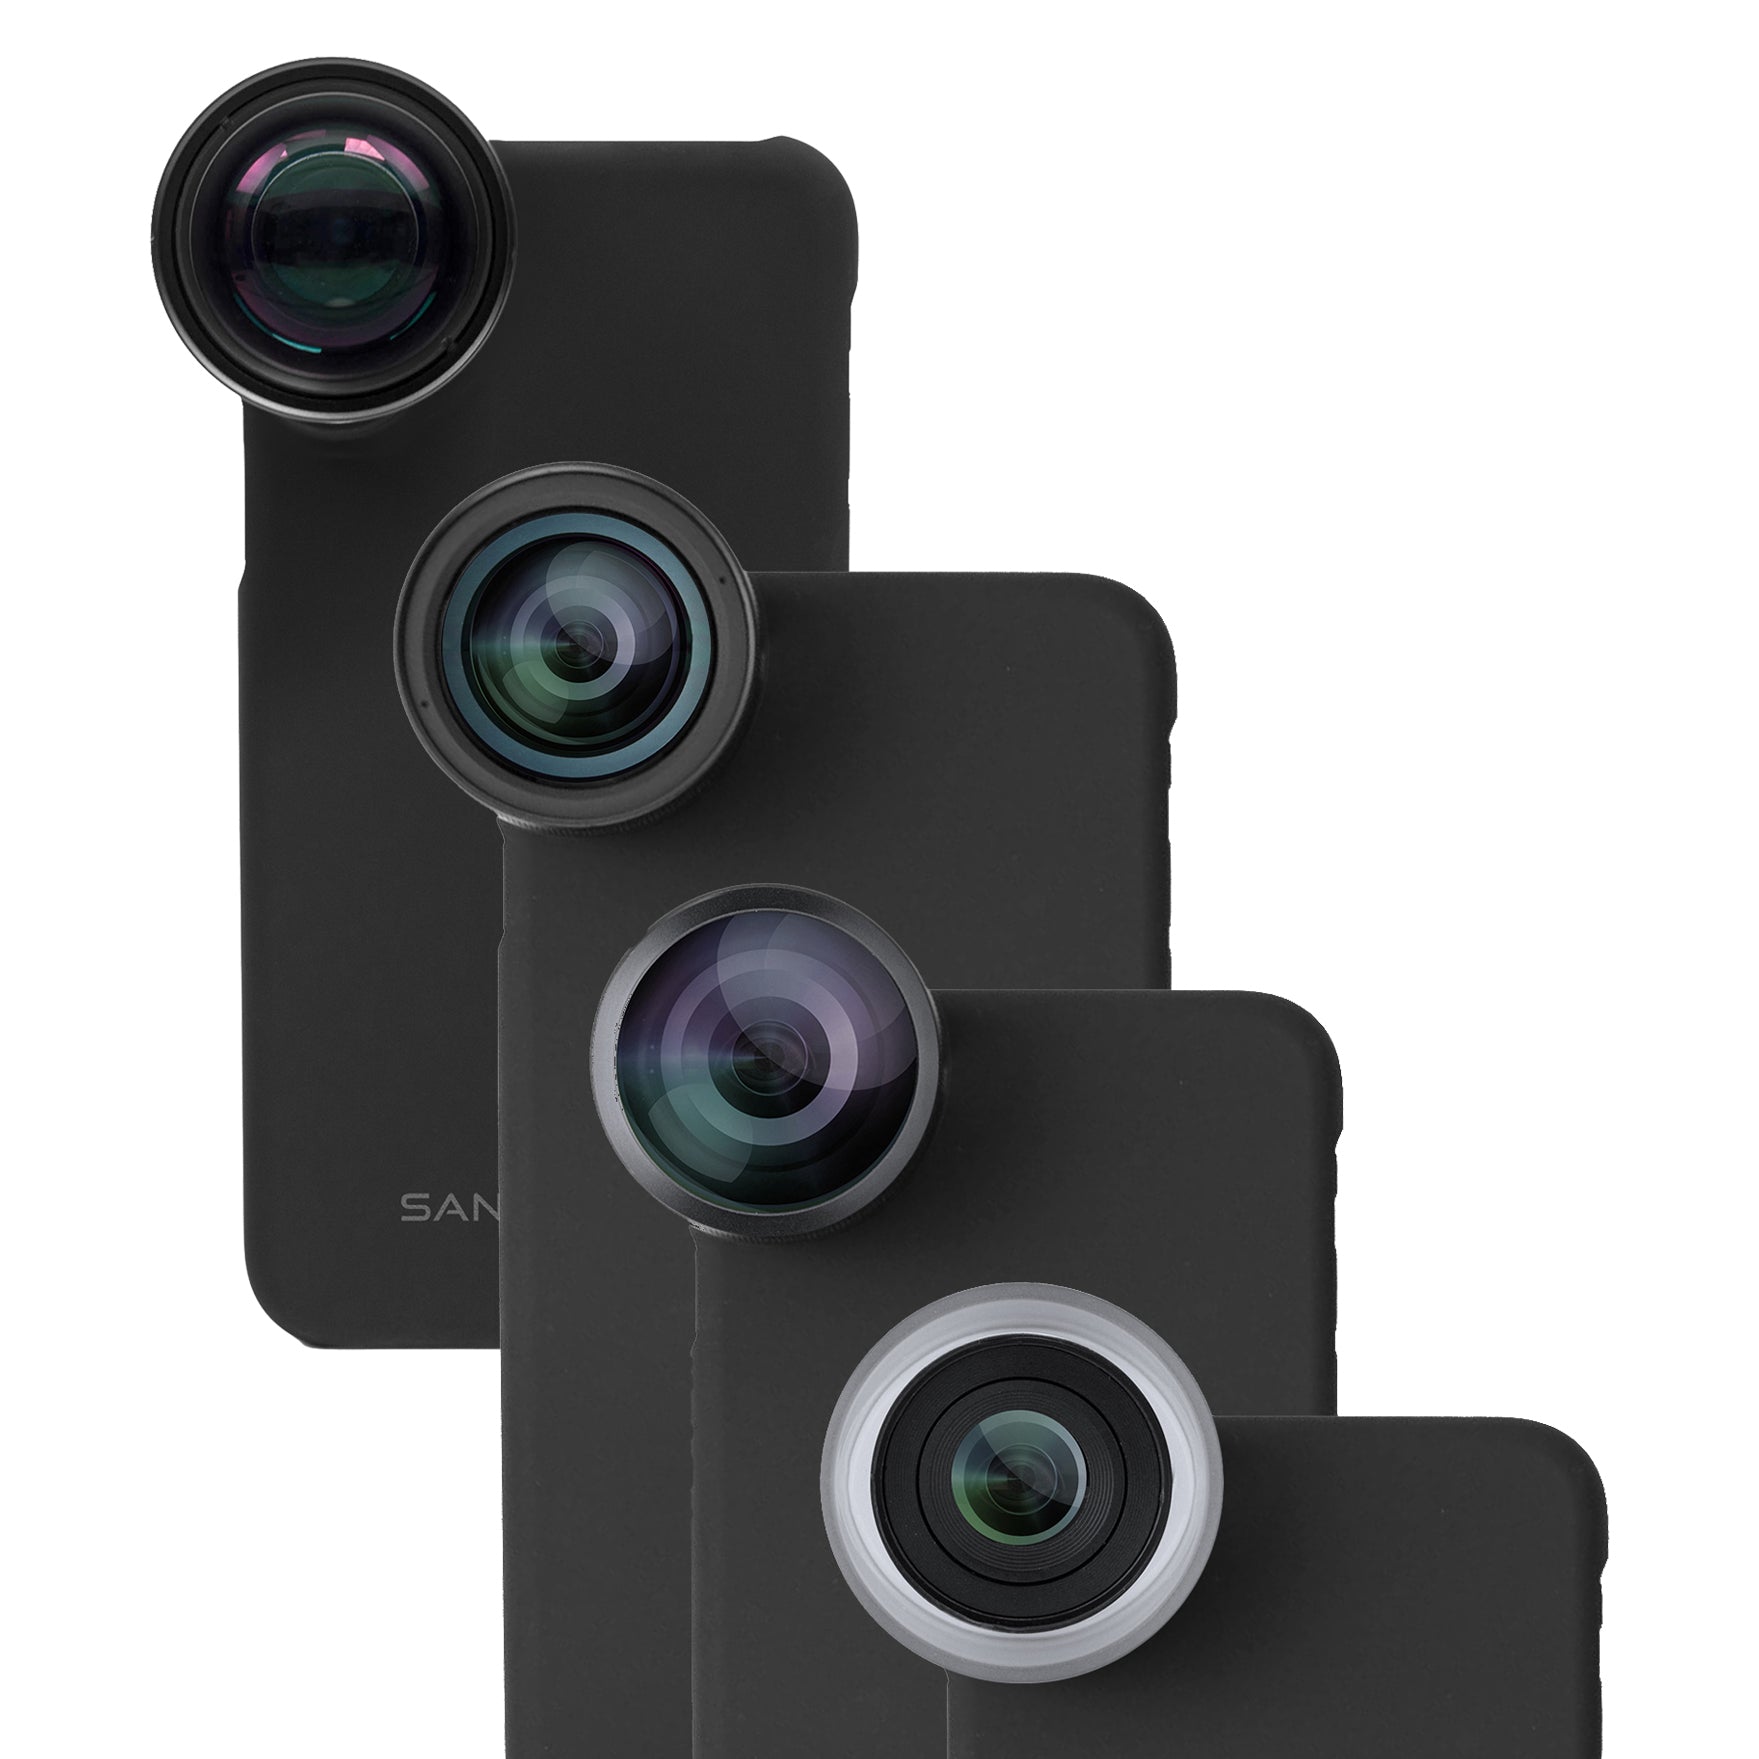 Varken Fietstaxi gekruld iPhone XR Lens Kit - Wide, Telephoto, Macro & Fisheye - SANDMARC